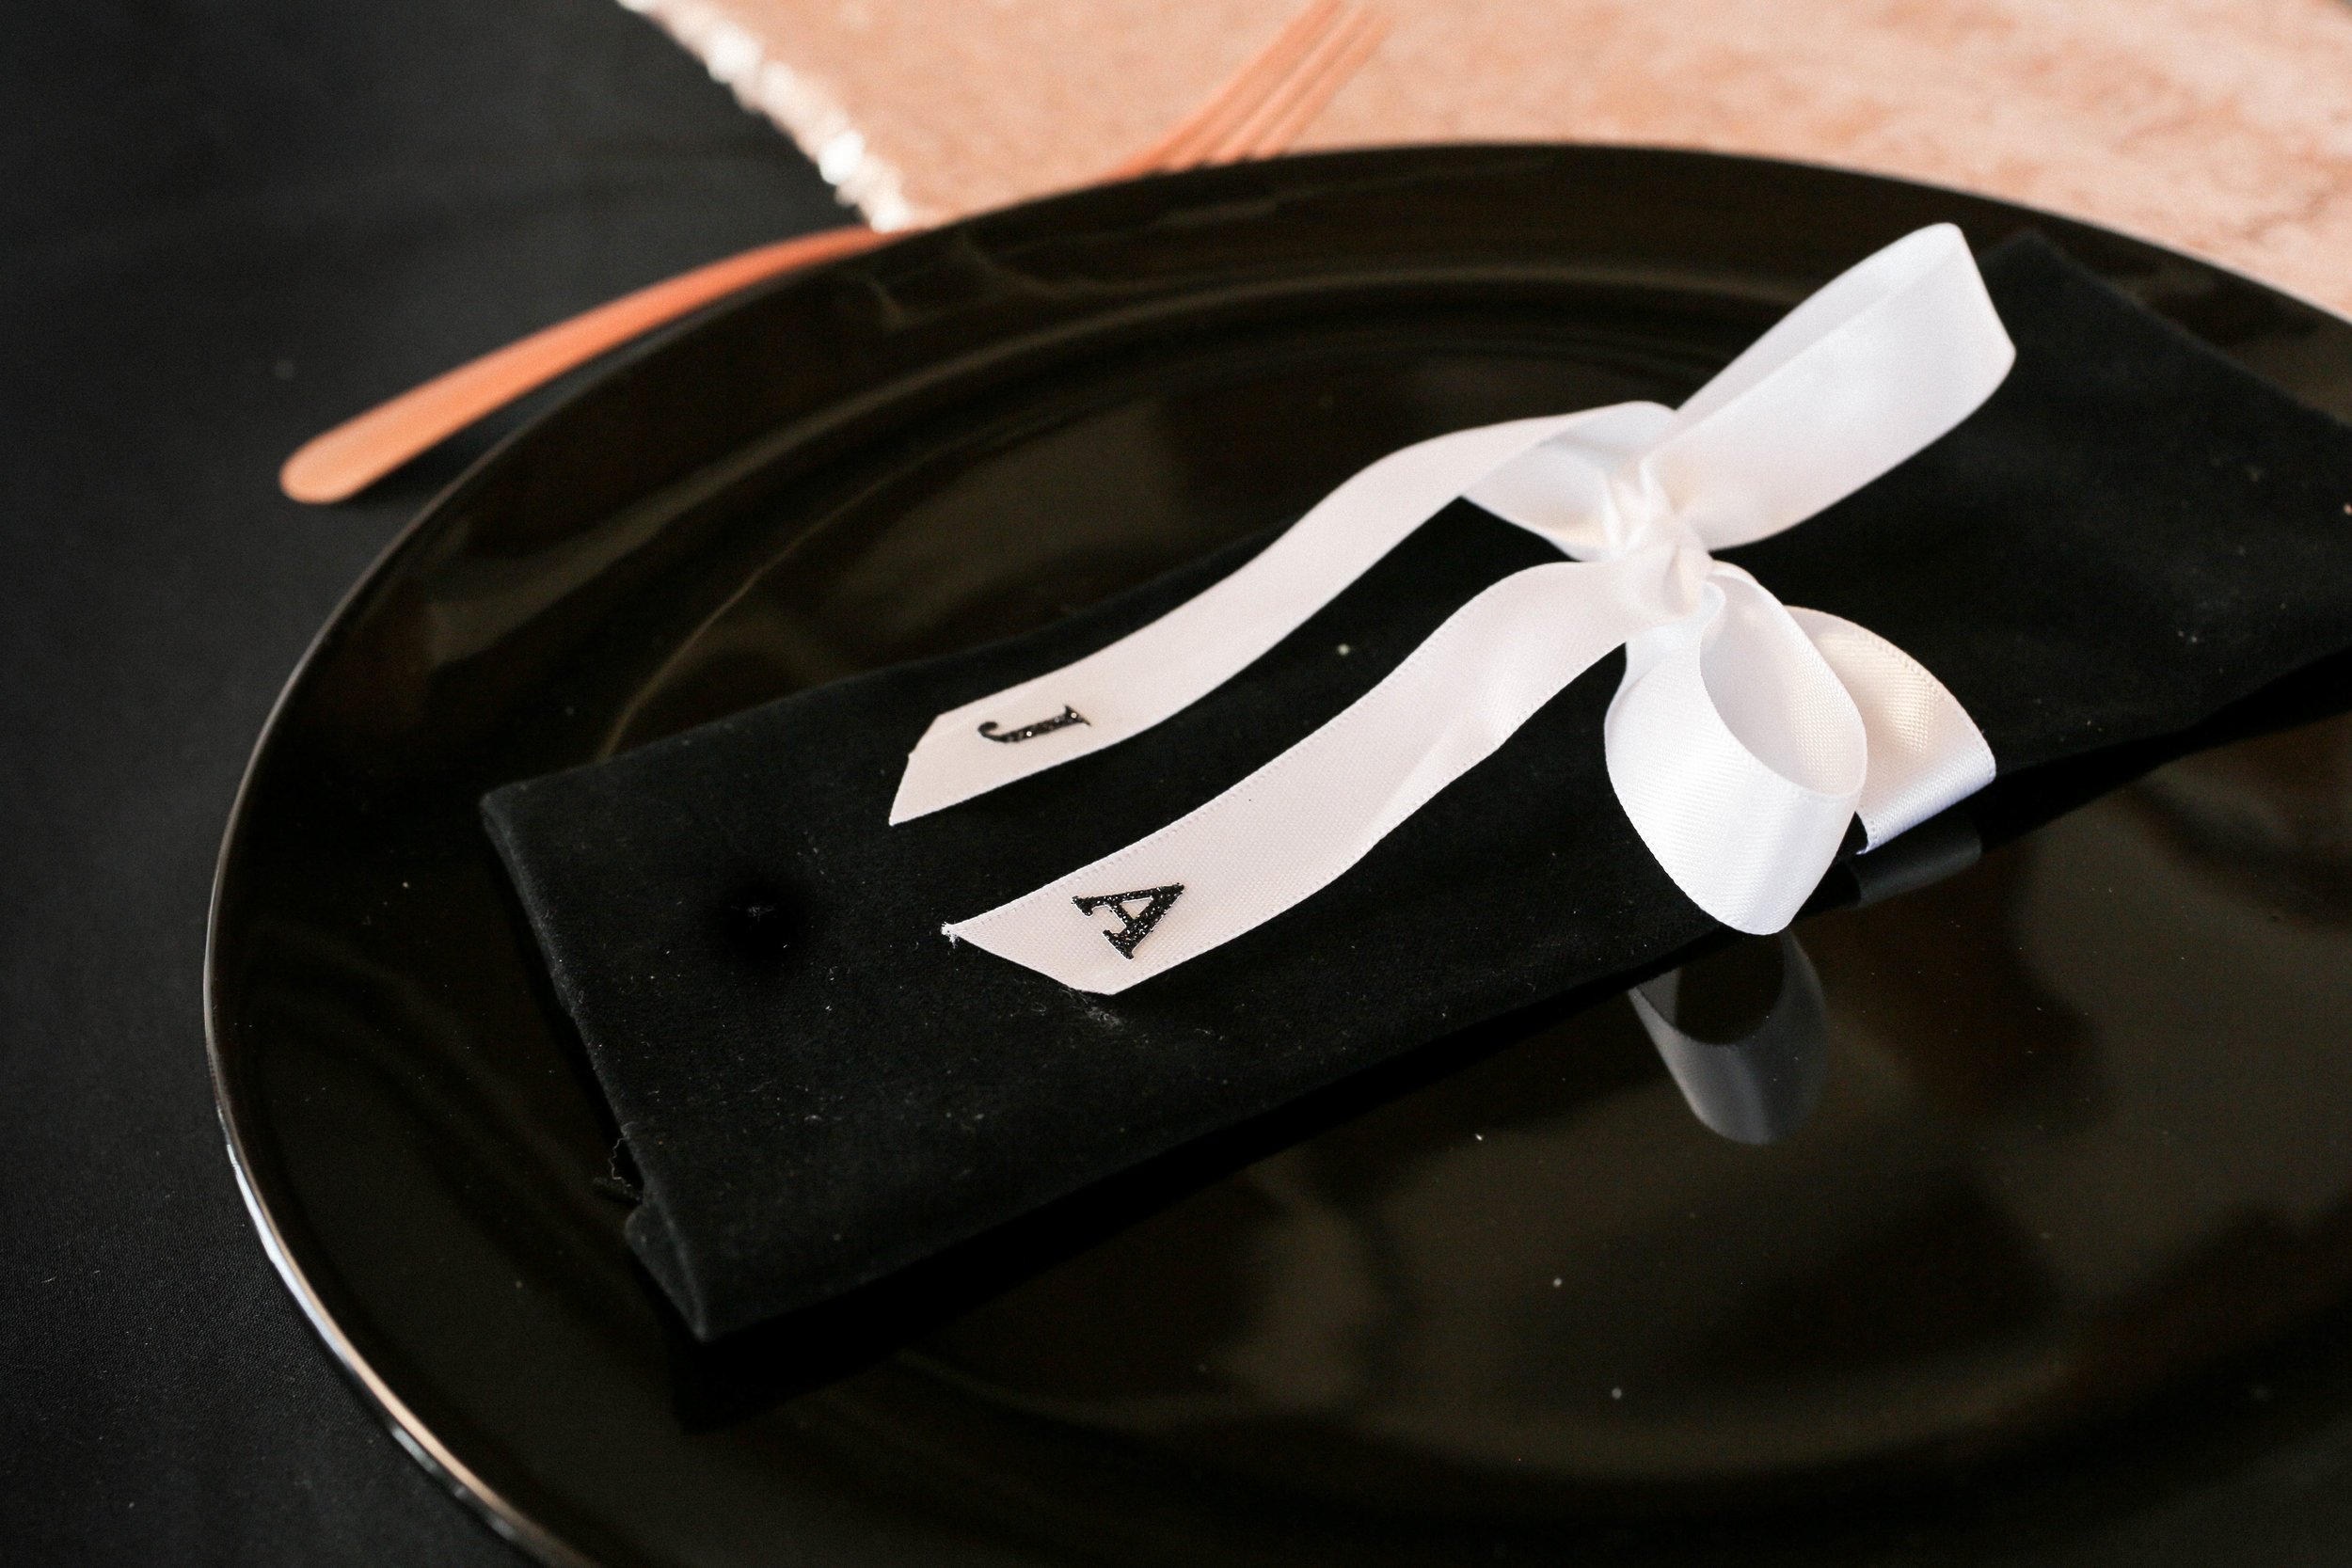 DIY BLUE, SILVER, WHITE & BLACK TABLE SETTING / CHEAP EASY WEDDING